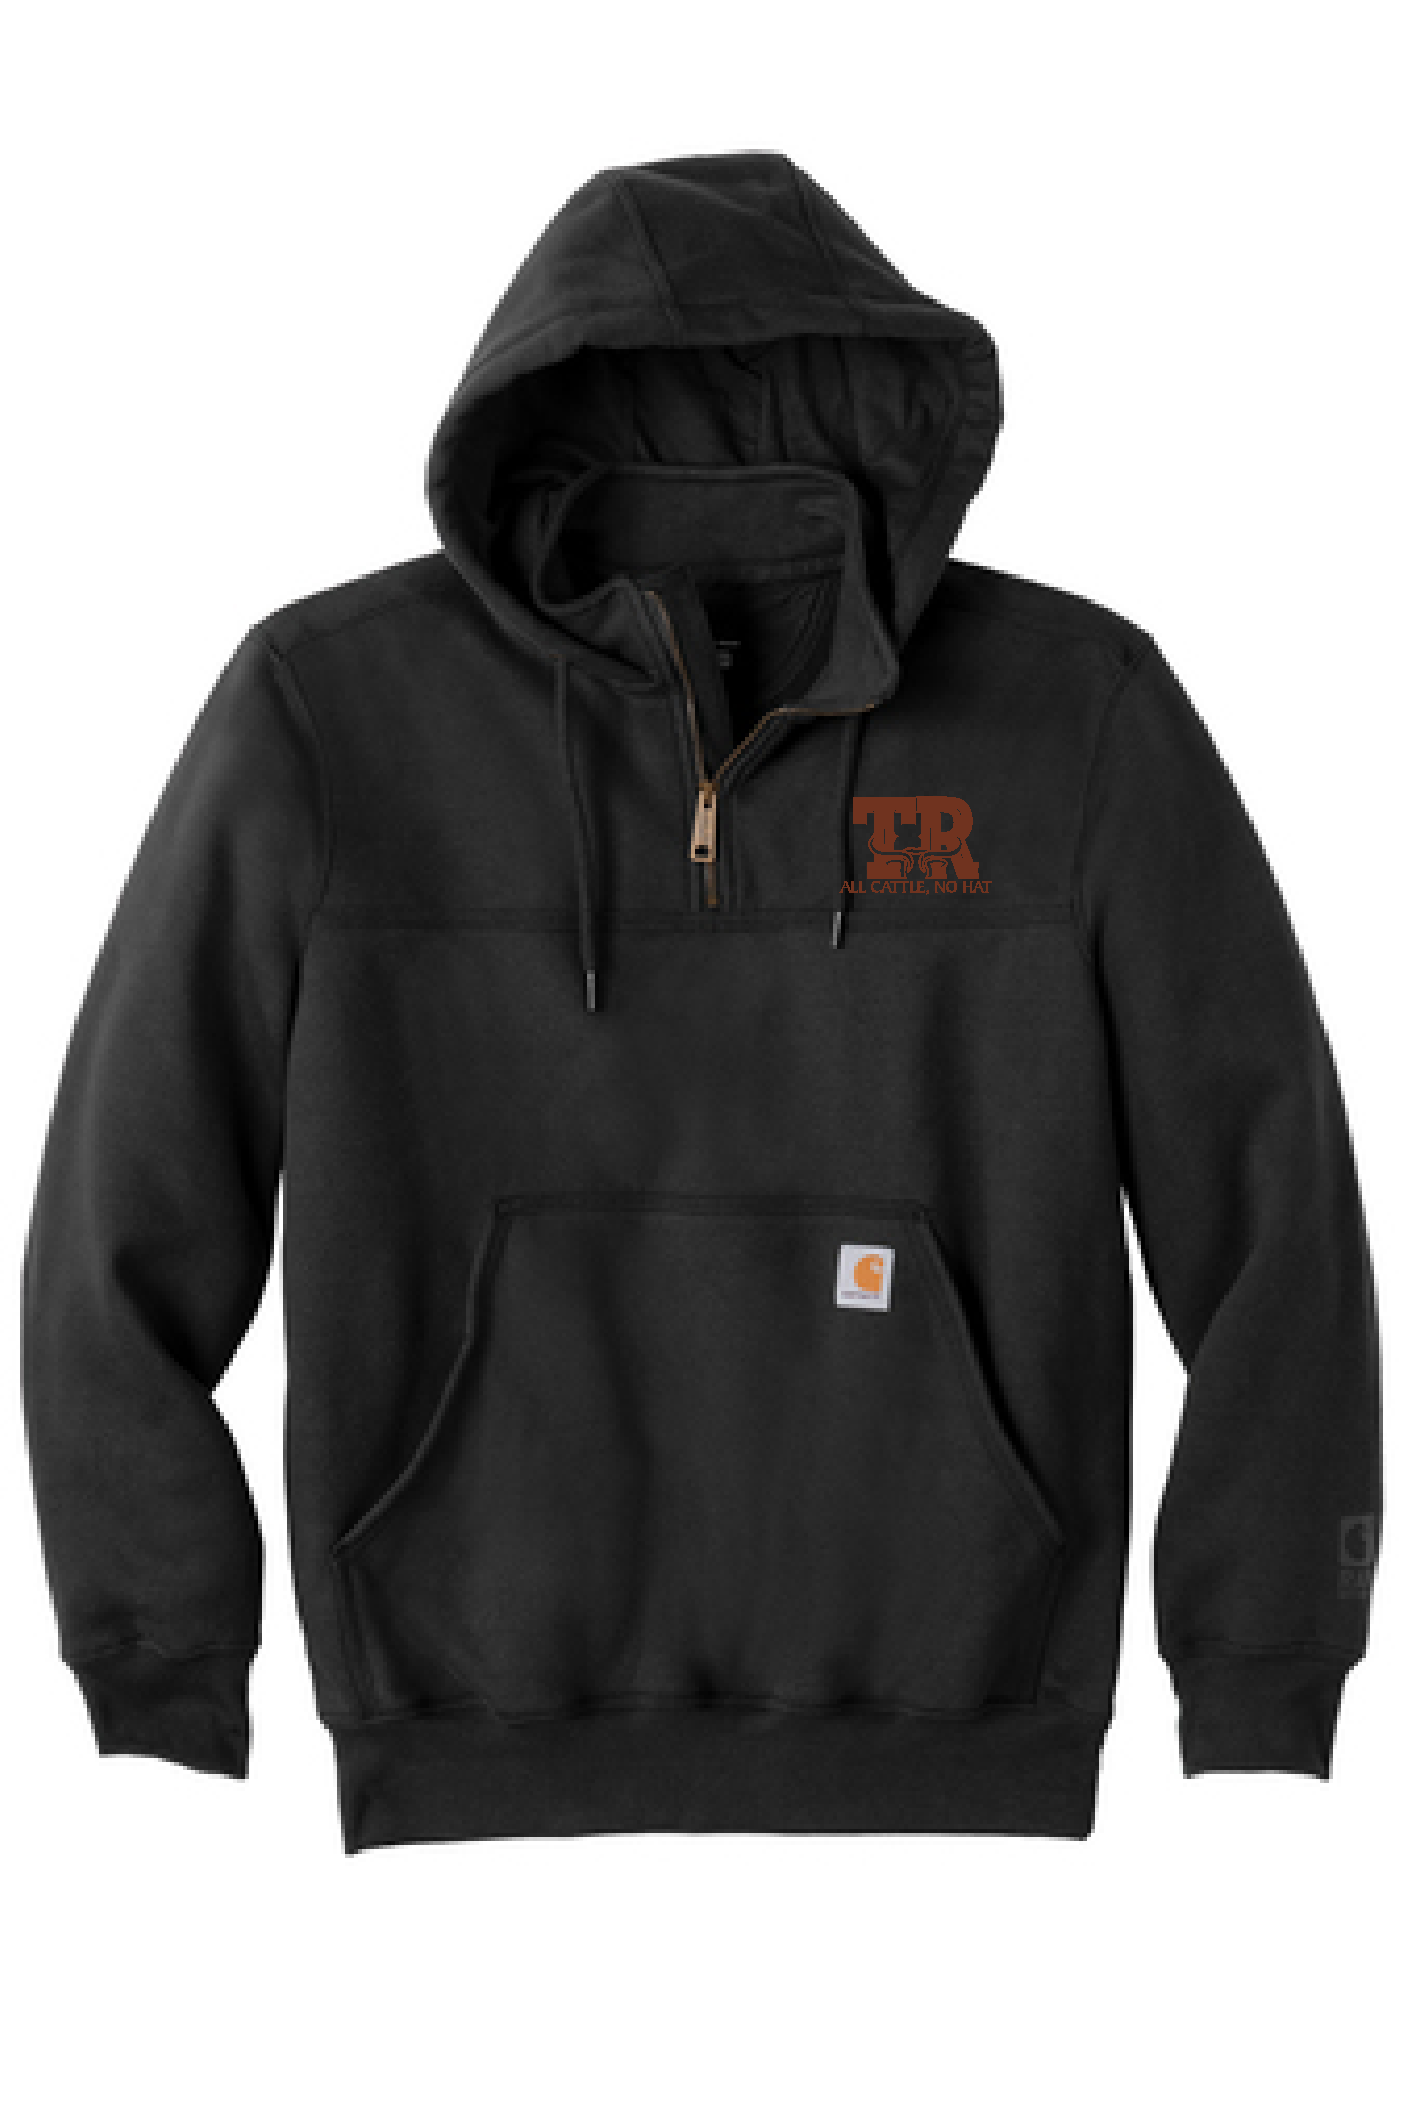 Twin Ridge Farms- Carhartt Rain Defender 1/4 Zip Hoodie-Embroidered Logo